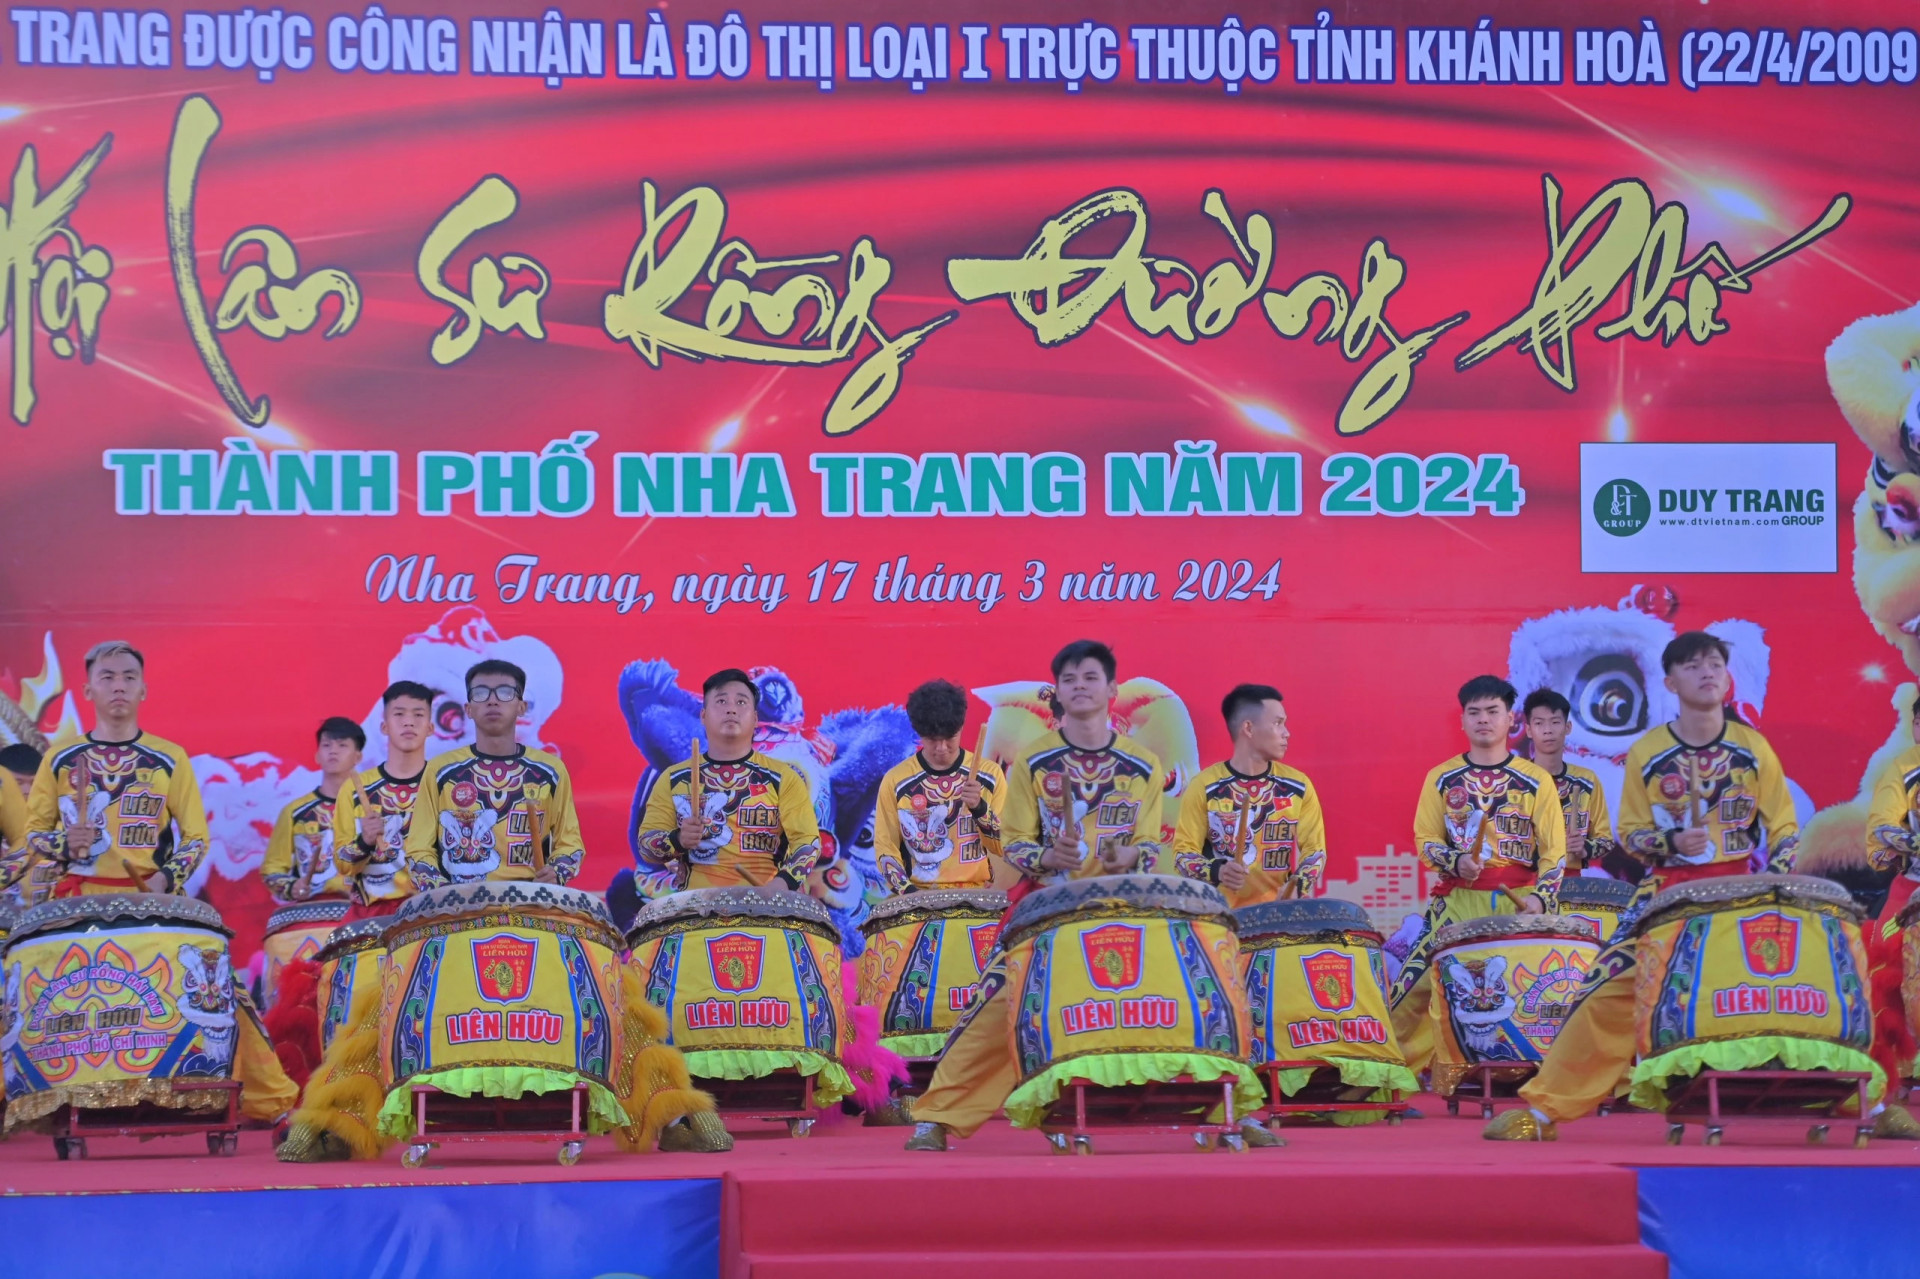 A drum performance of Nam Hai Lien Huu unicorn-lion-dragon troupe 

